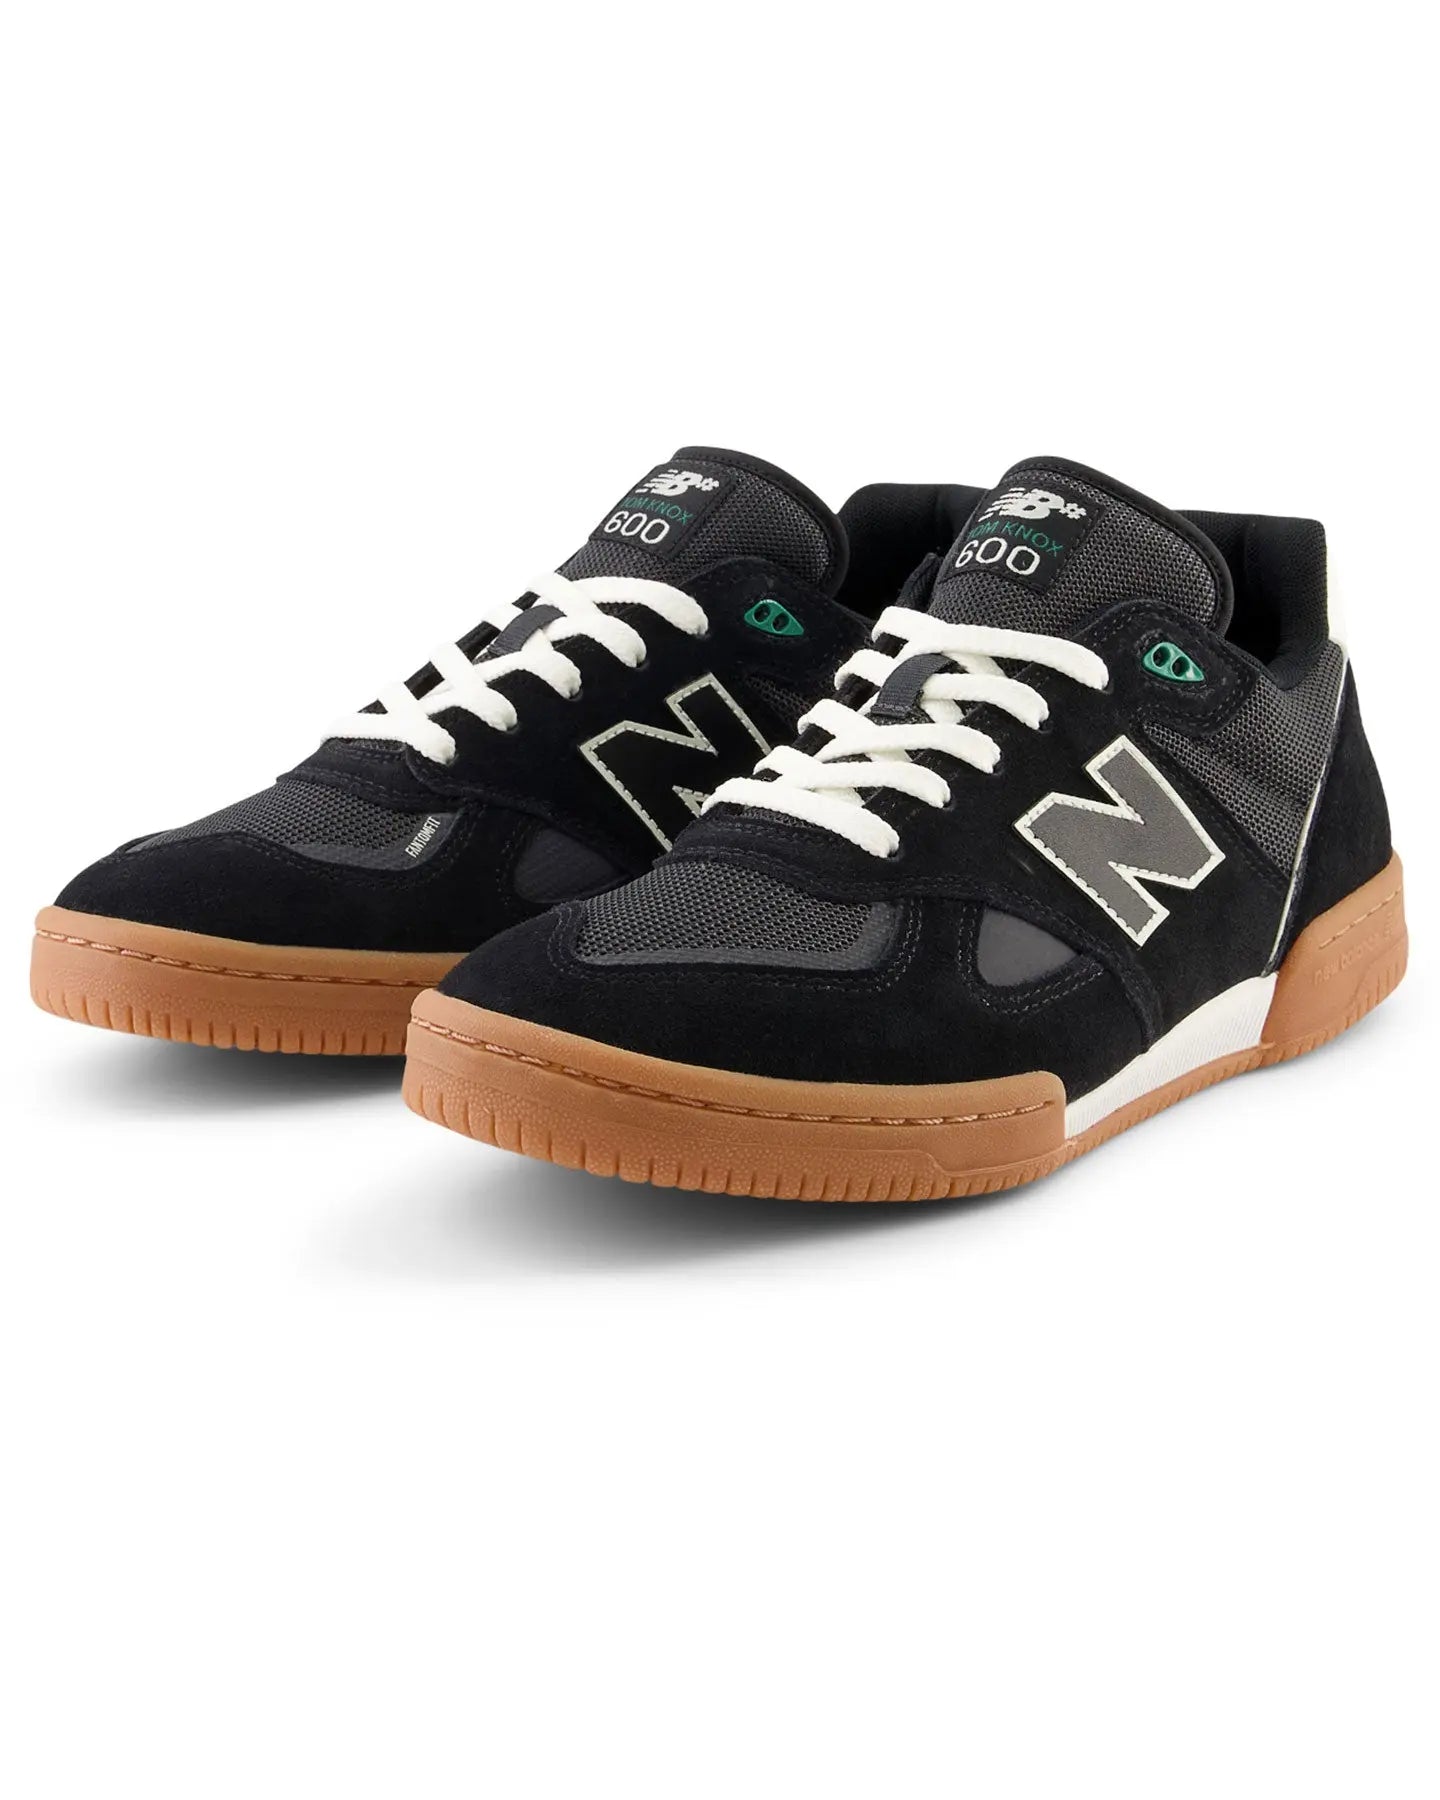 New Balance 600 - Black / Gum Footwear